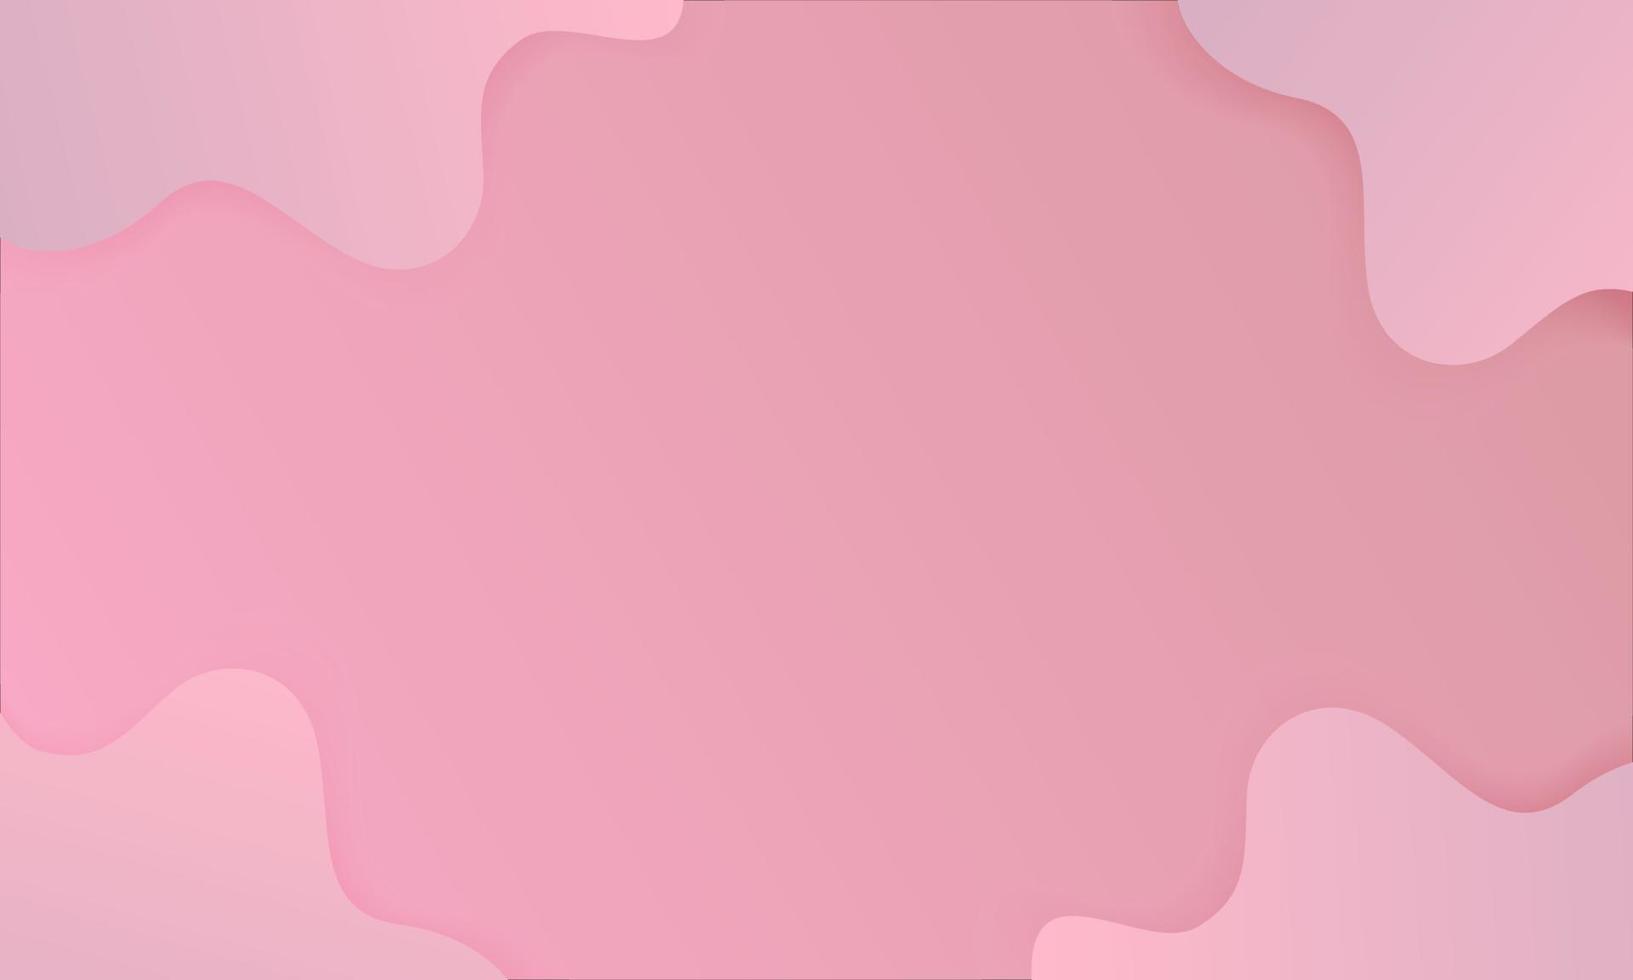 Pink geometric background fluid shapes vector elements. Vector illustration